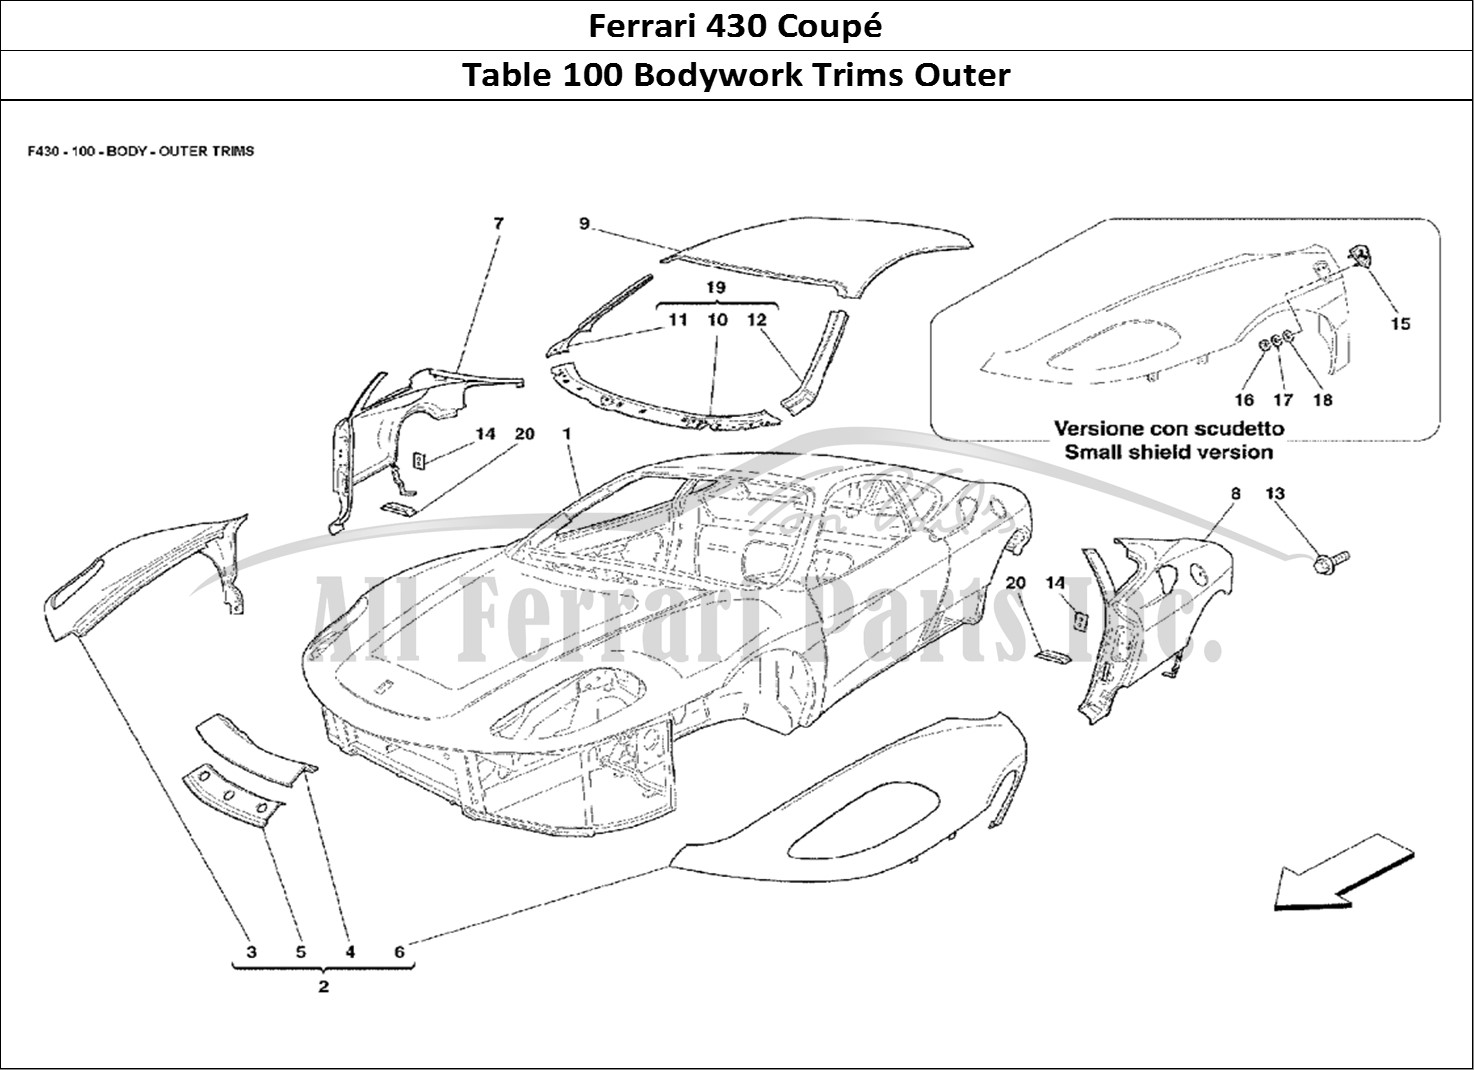 Ferrari Parts Ferrari 430 Coup Page 100 Body - Outer Trims